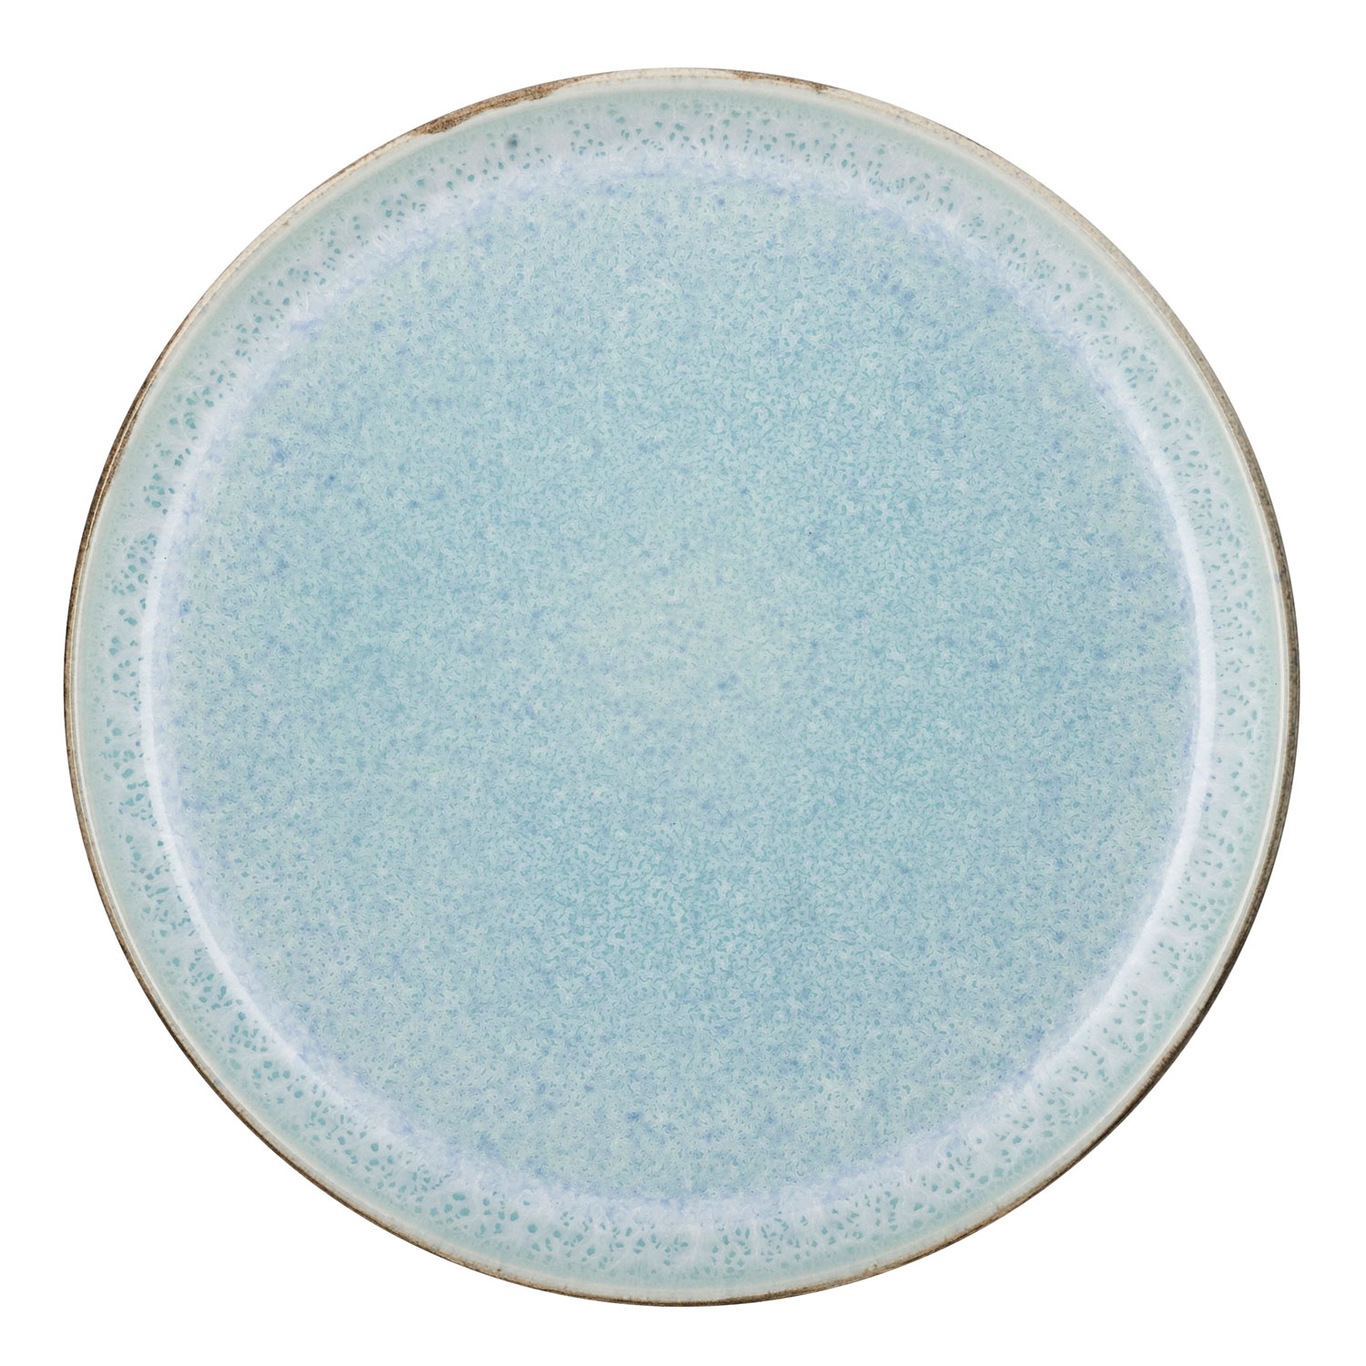 Bitz Gastro Plate Ø21cm, Grey/Light Blue